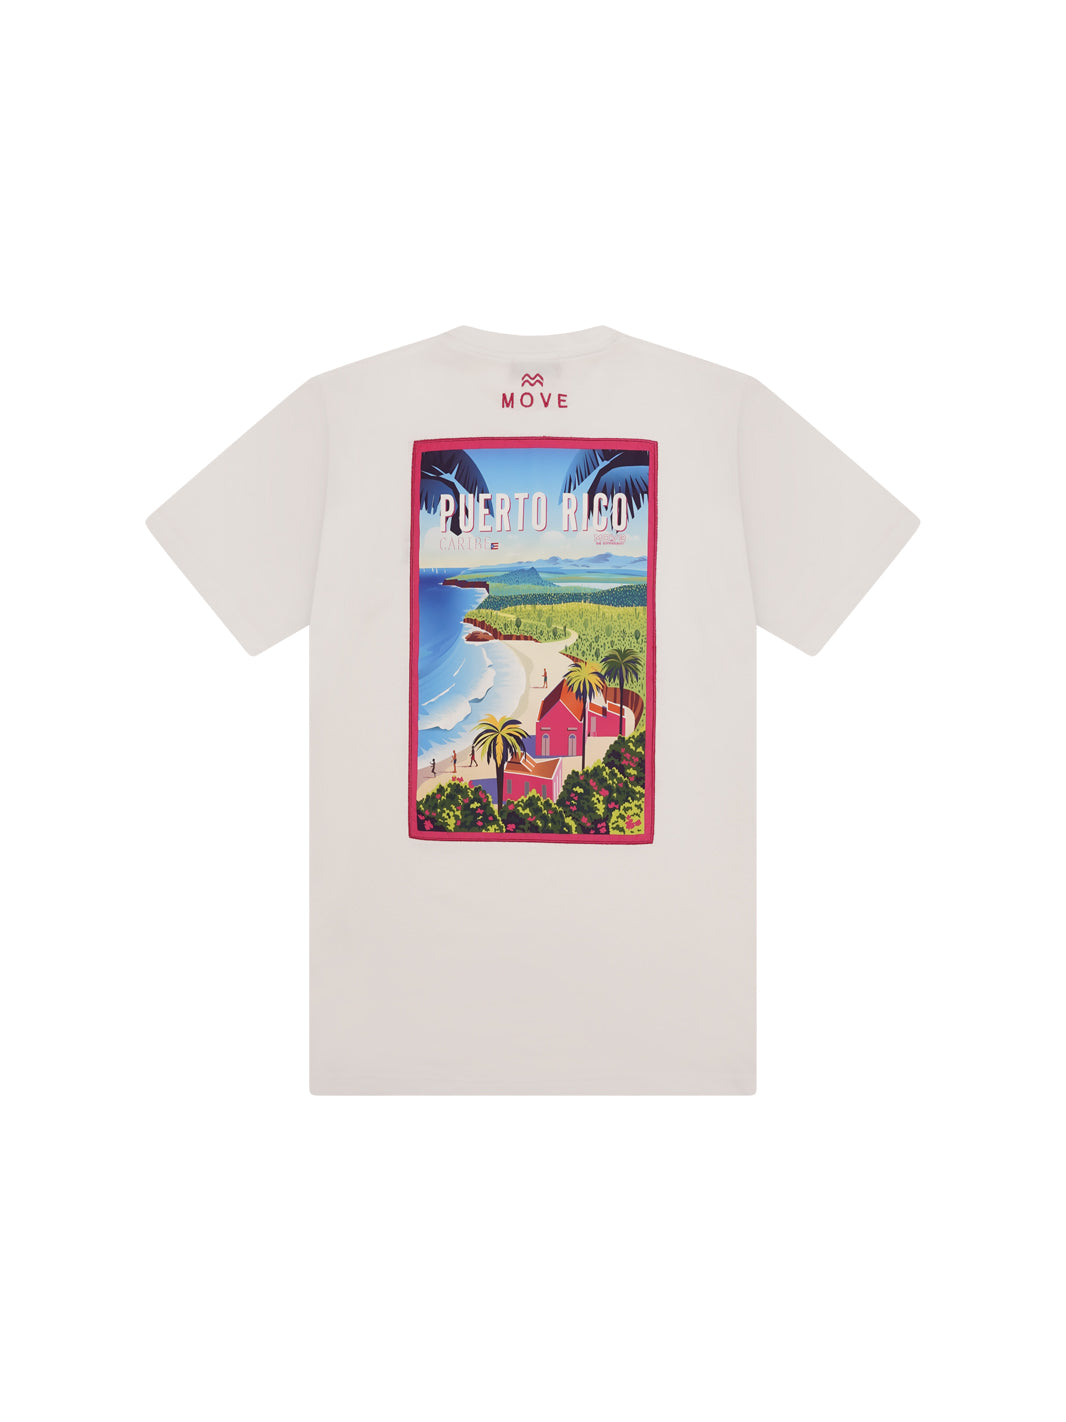 TS Print Boy Puerto Rico - T-Shirt - Move Beachwear